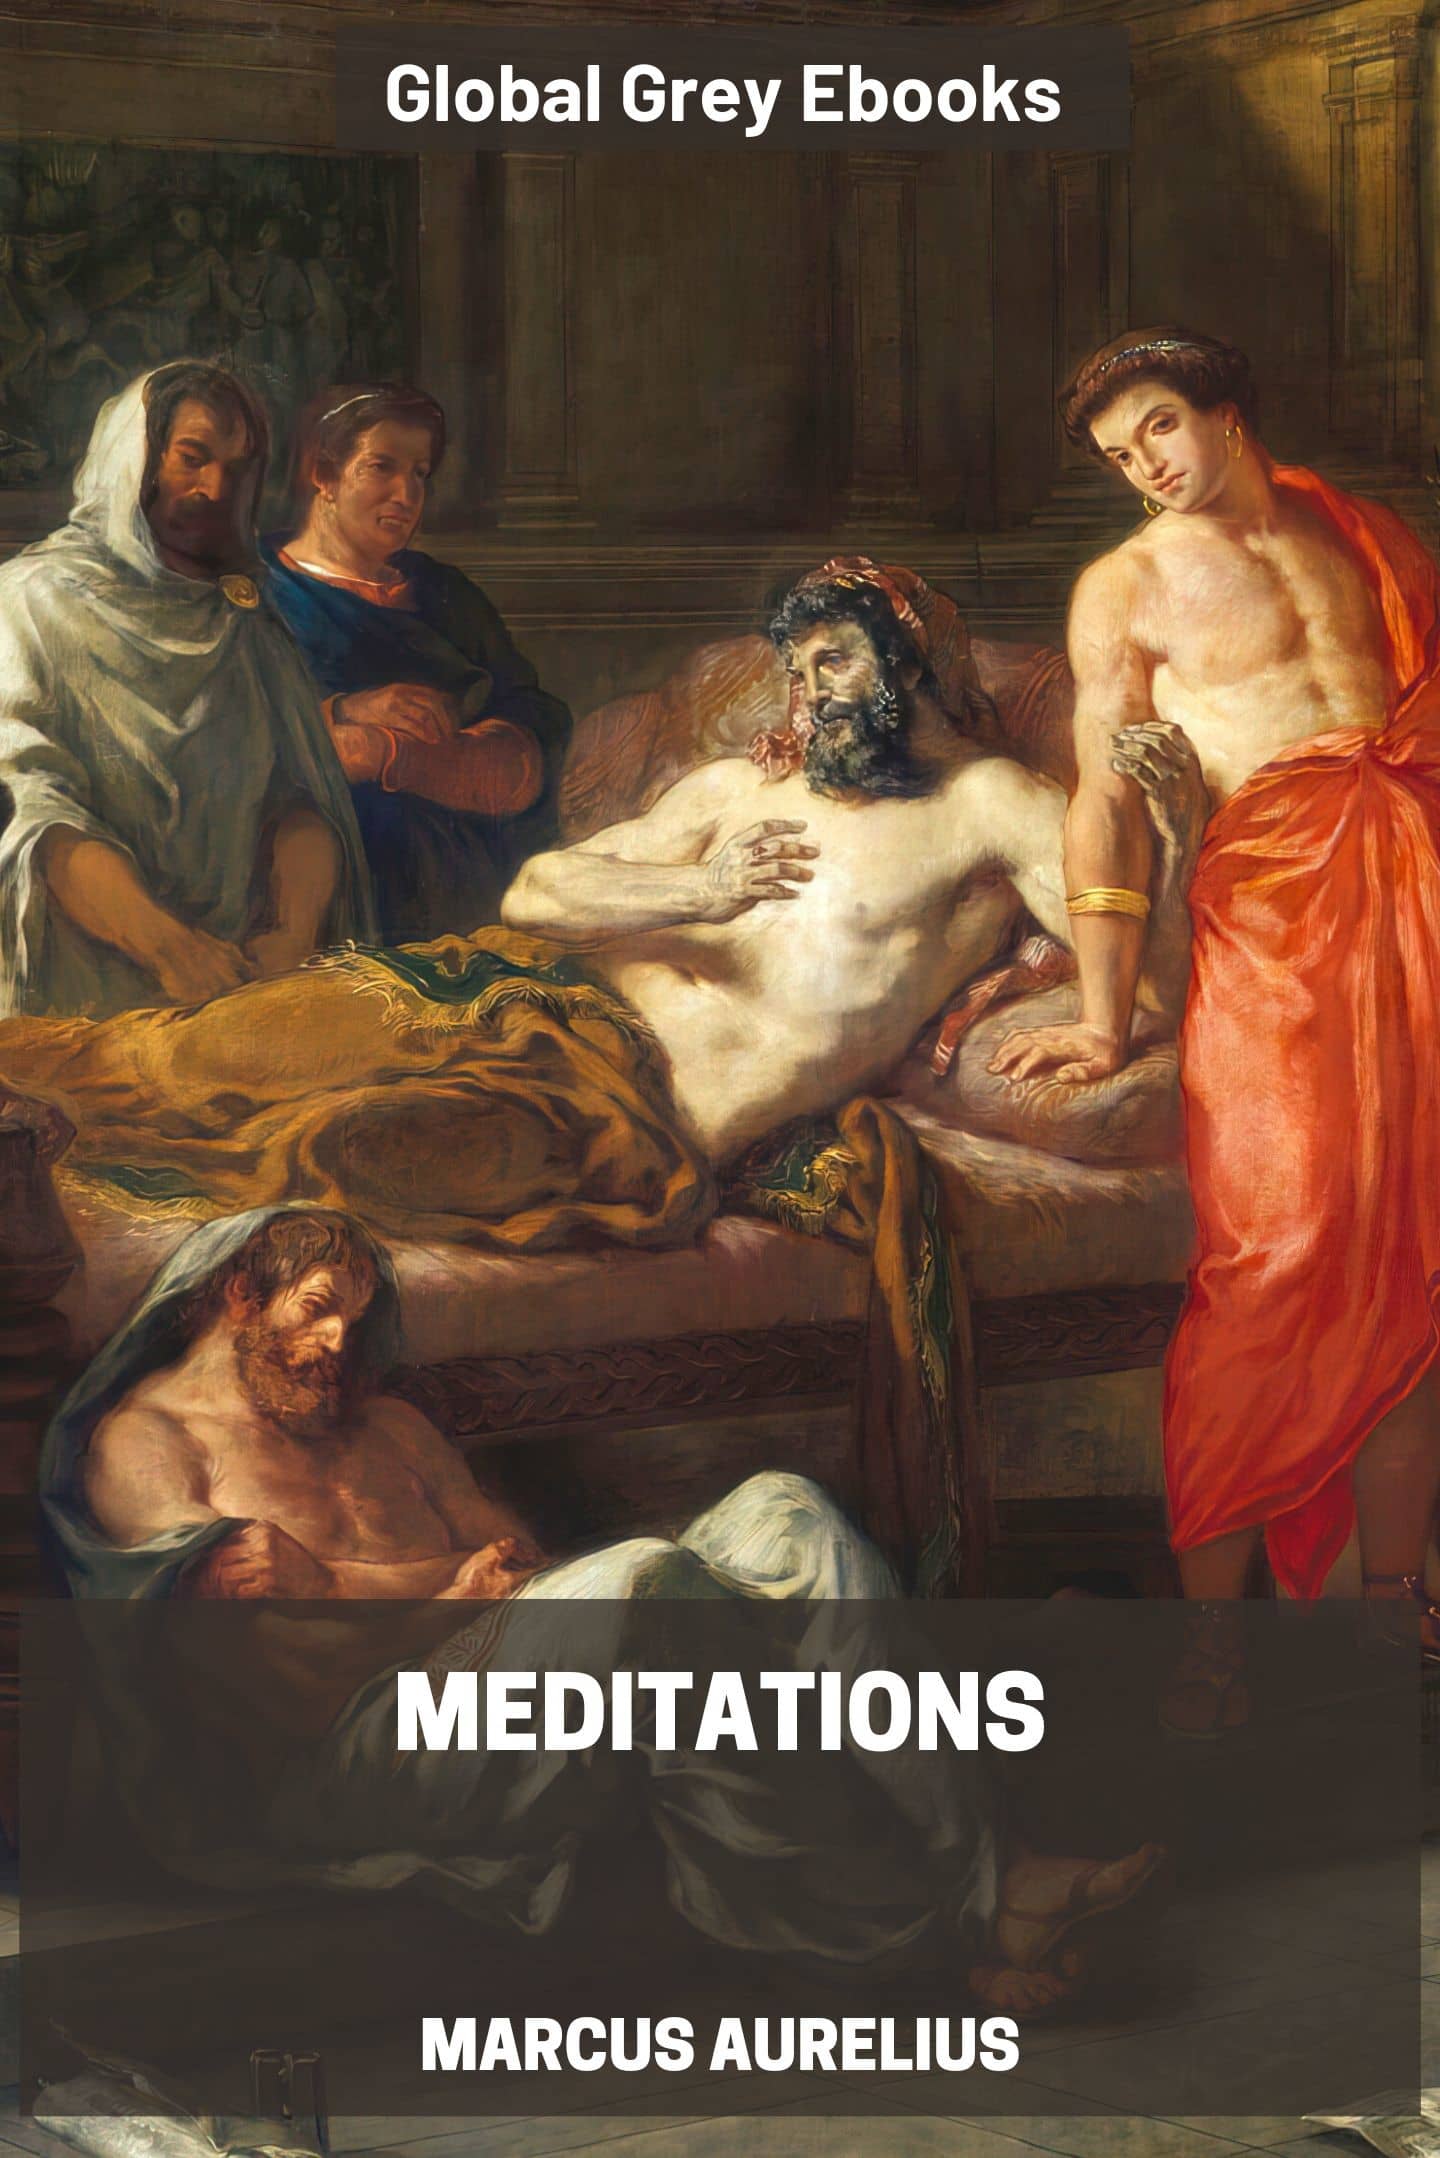 Meditations by Marcus Aurelius - Free ebook - Global Grey ebooks